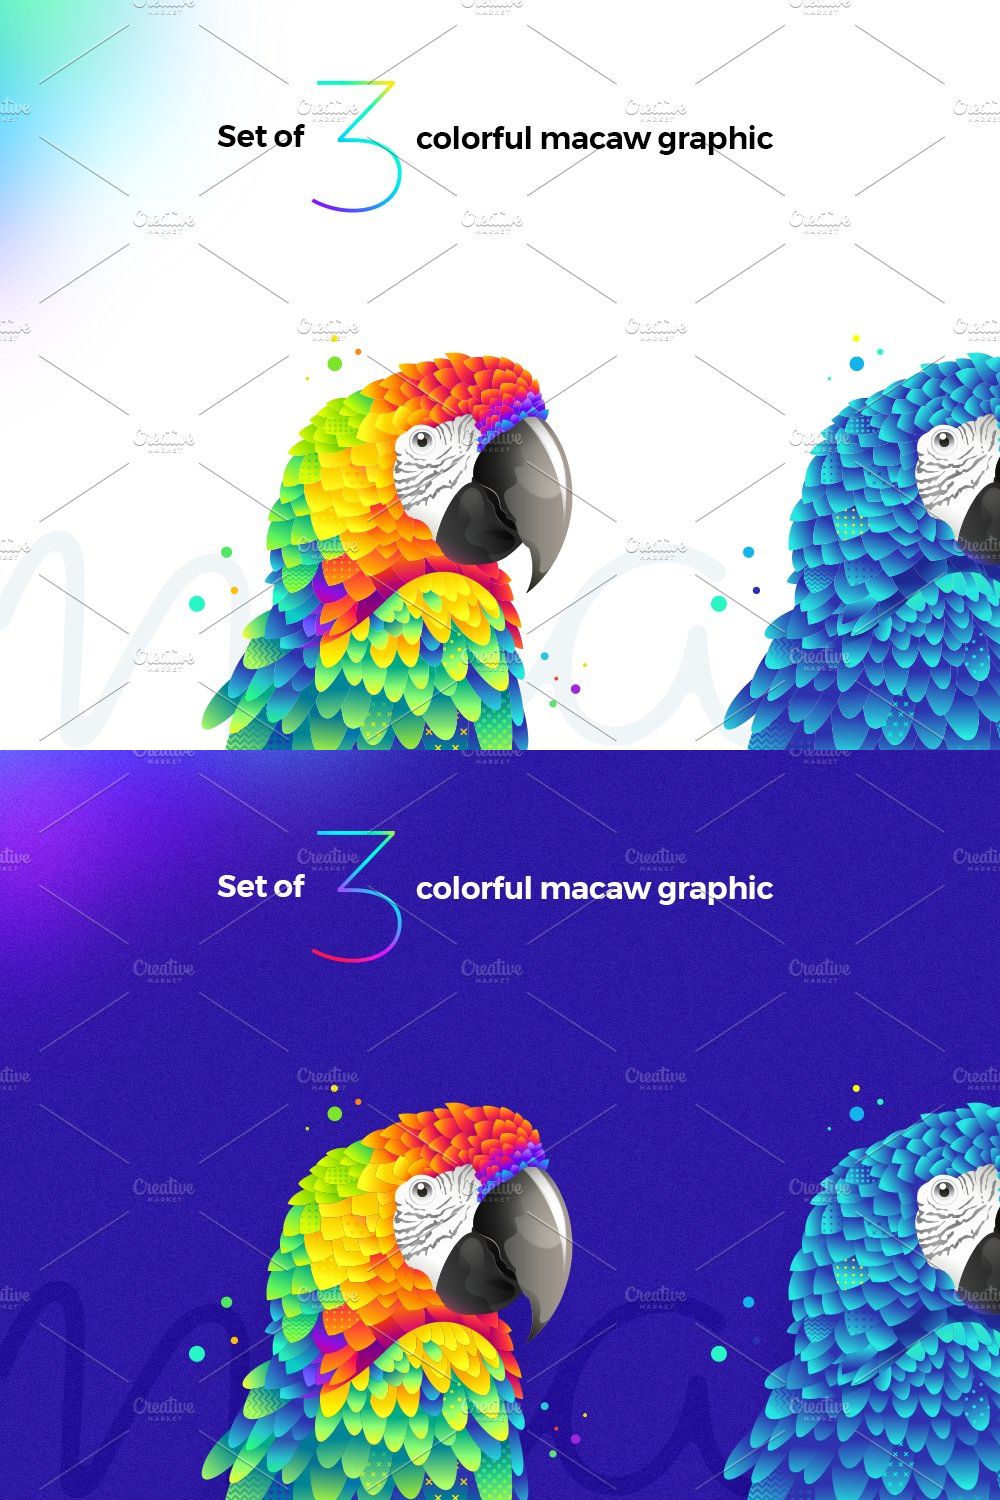 Macaw illustration set pinterest preview image.